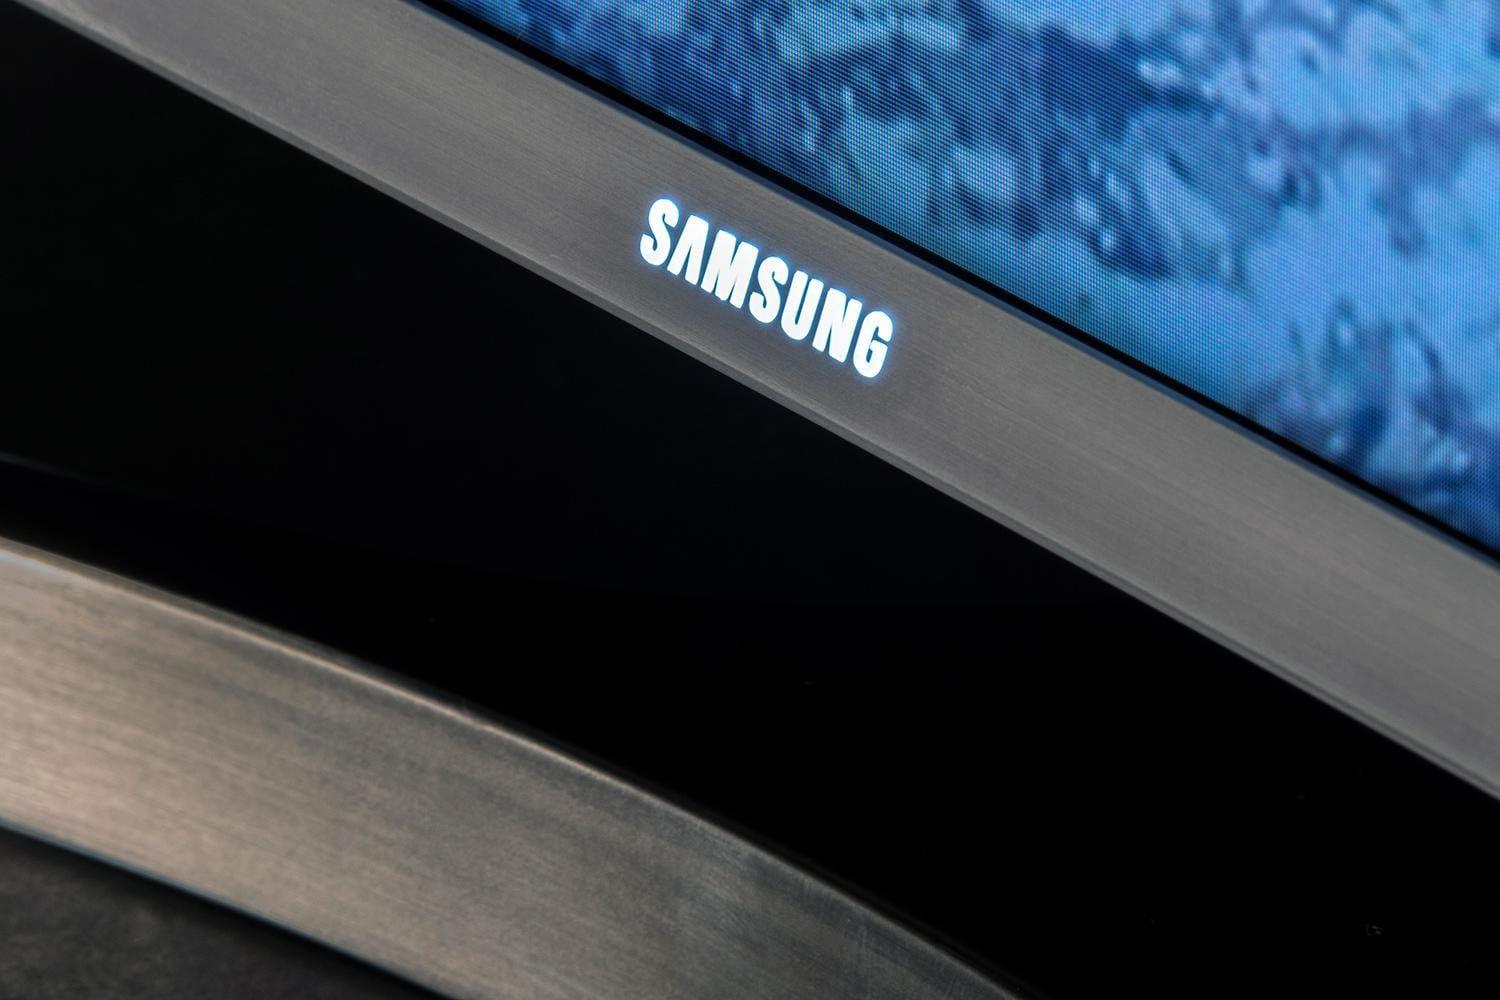 Samsung TV Logo - Samsung UN65JS9500 Review & Rating